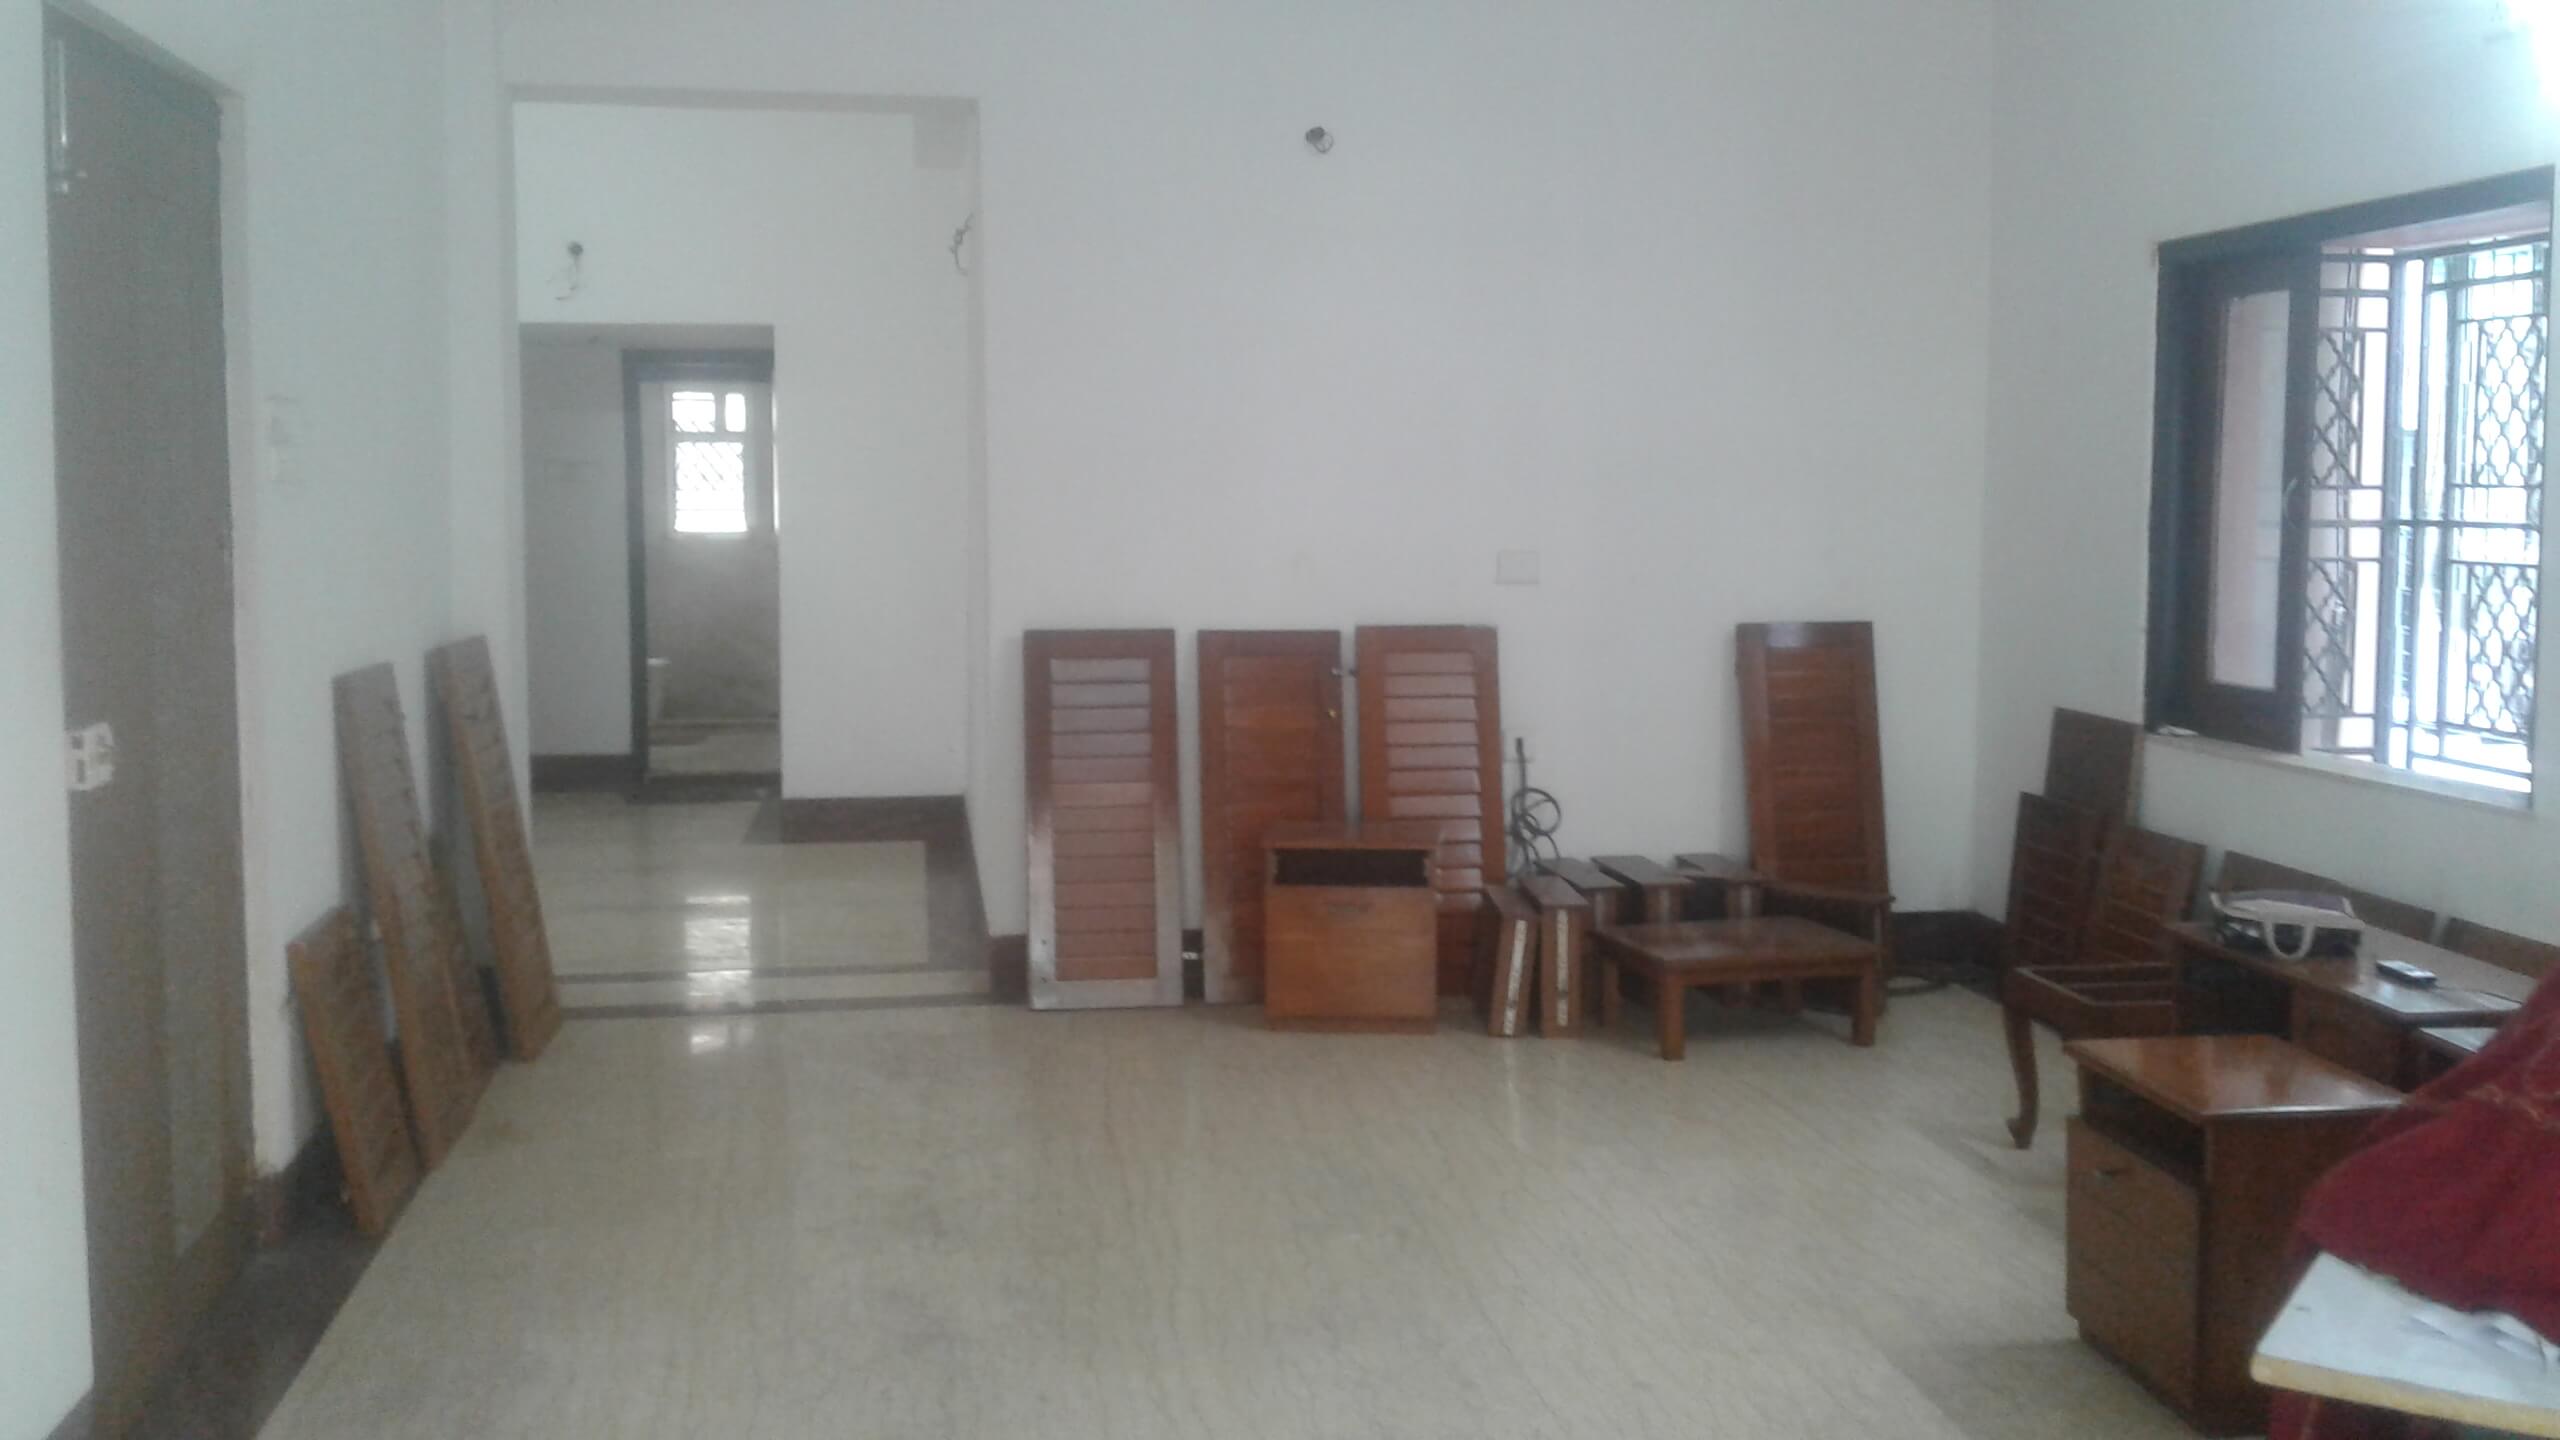 Office For Rent in Hindustan Road Kolkata (Id: 20370)